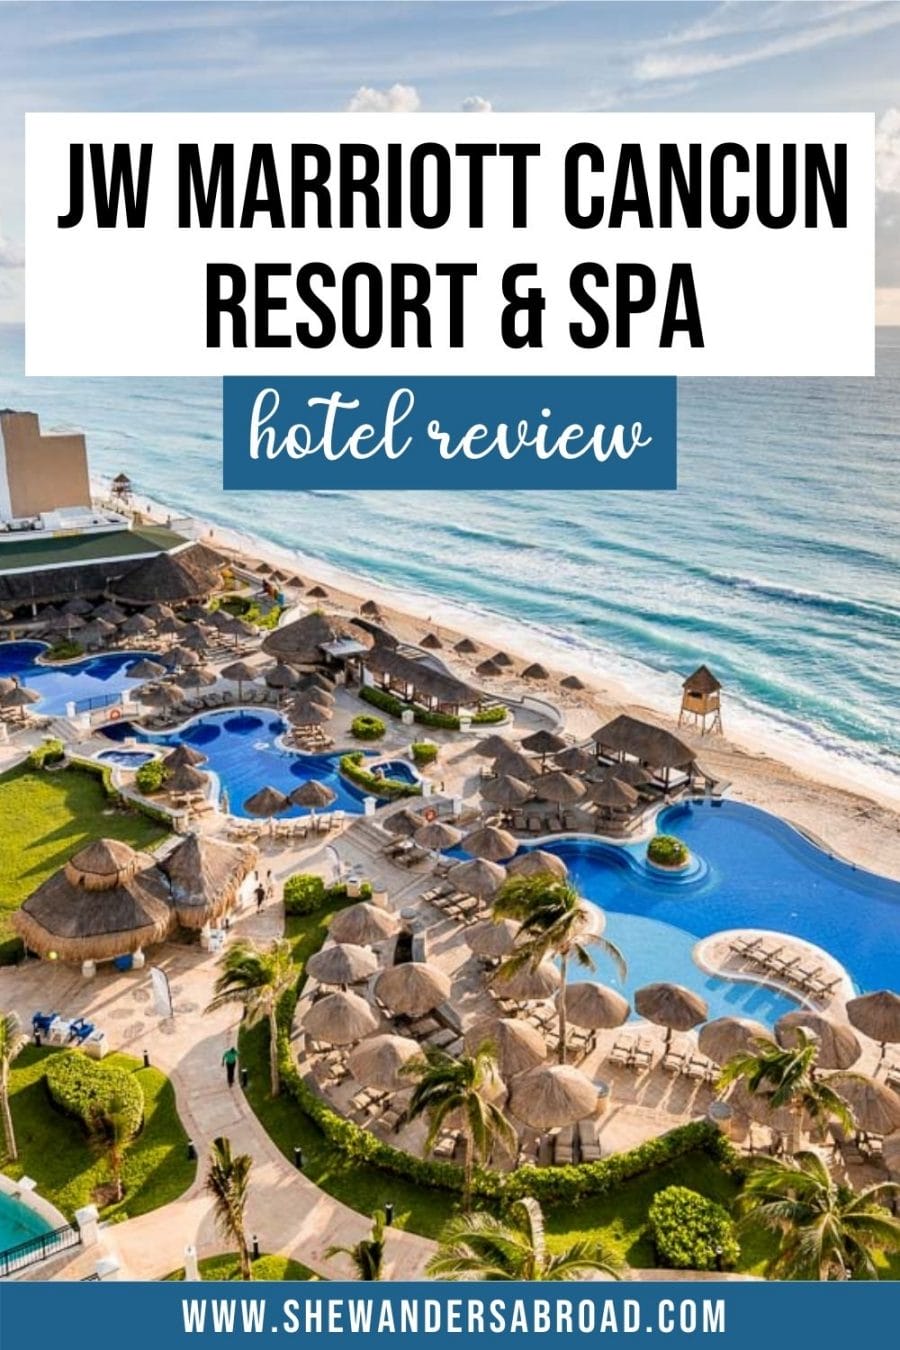 JW Marriott Cancun Hotel Review